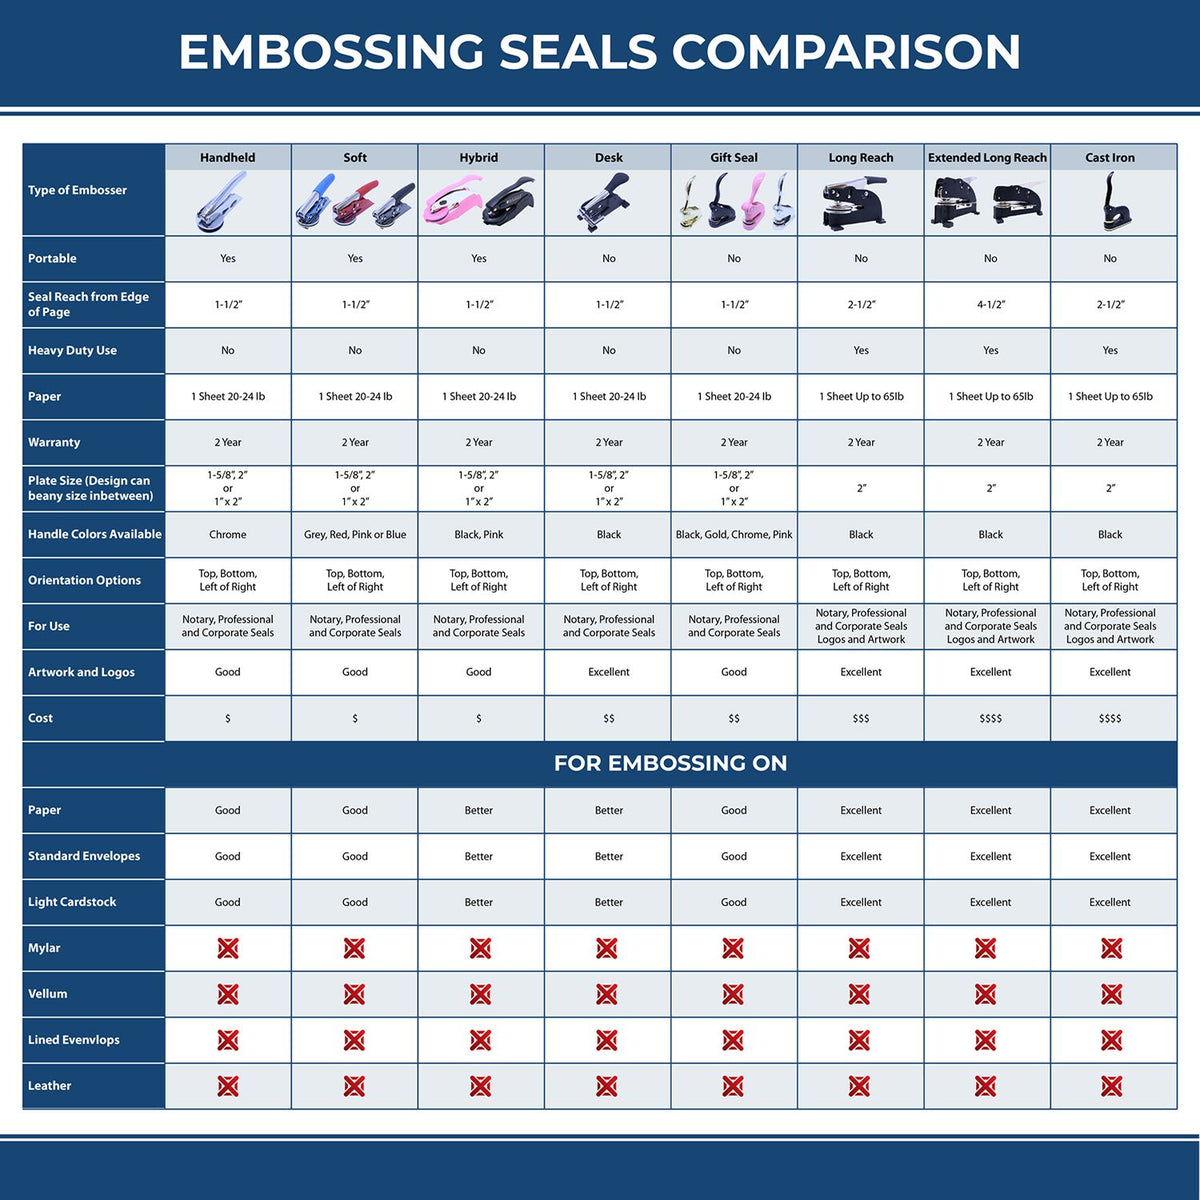 Geologist Blue Soft Seal Handheld Embosser 3037GEO Embossing Seal Comparison